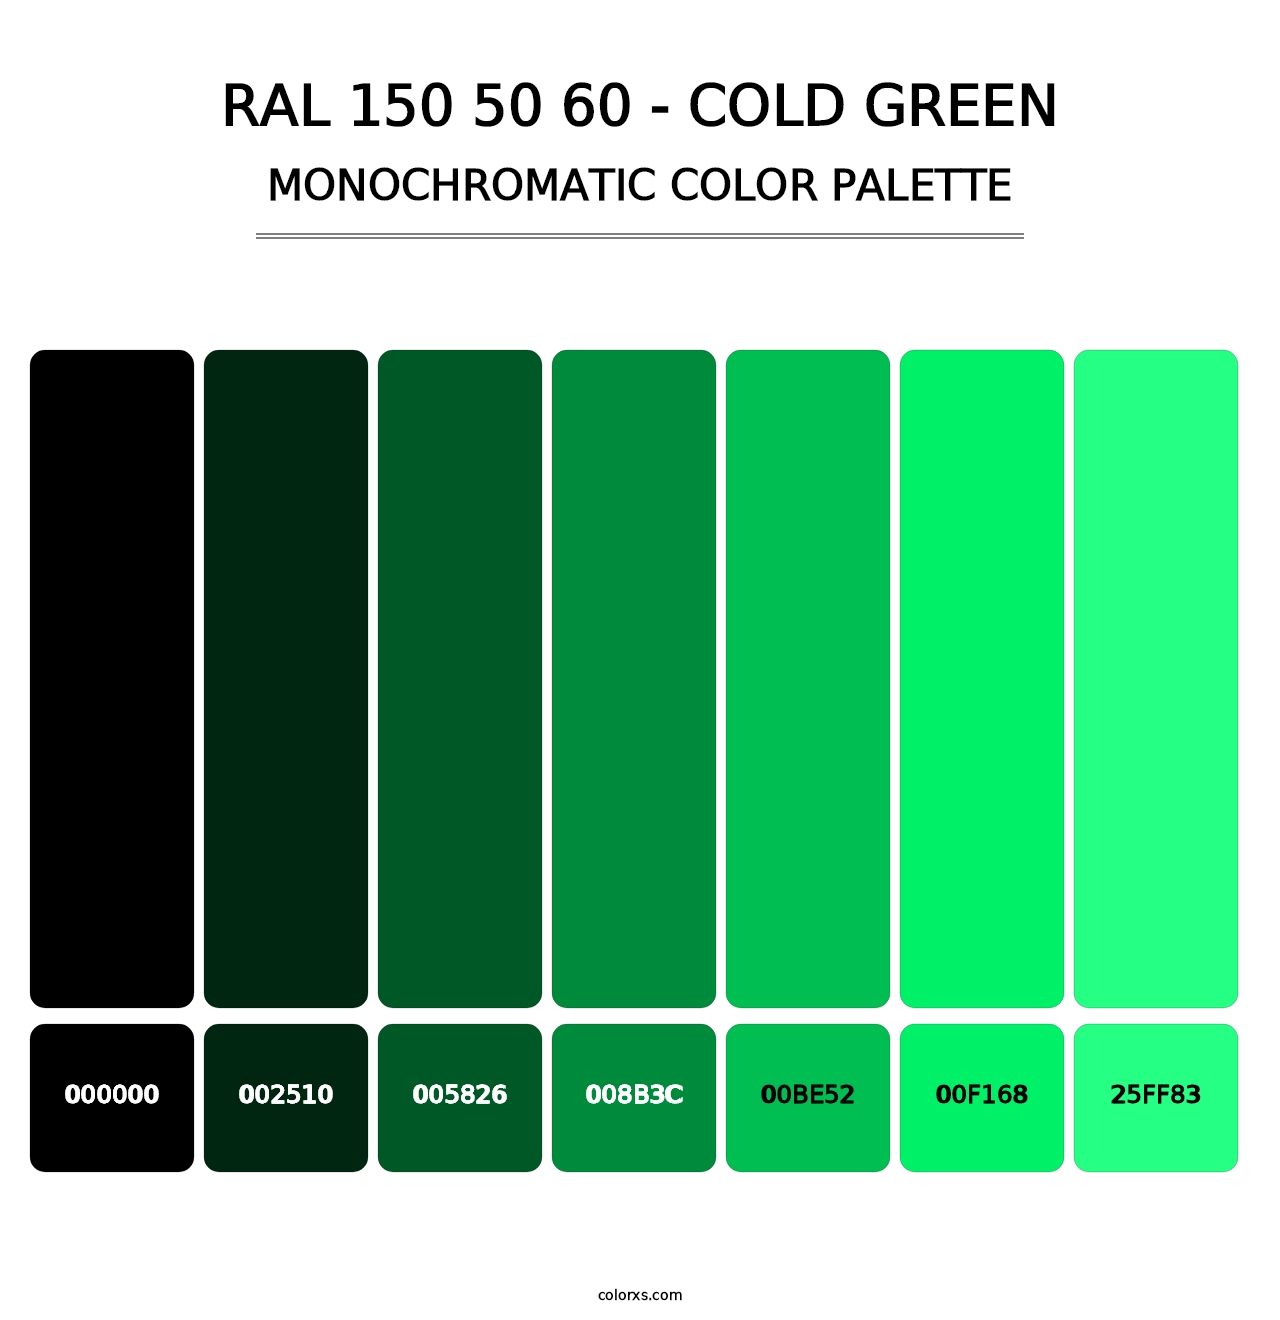 RAL 150 50 60 - Cold Green - Monochromatic Color Palette